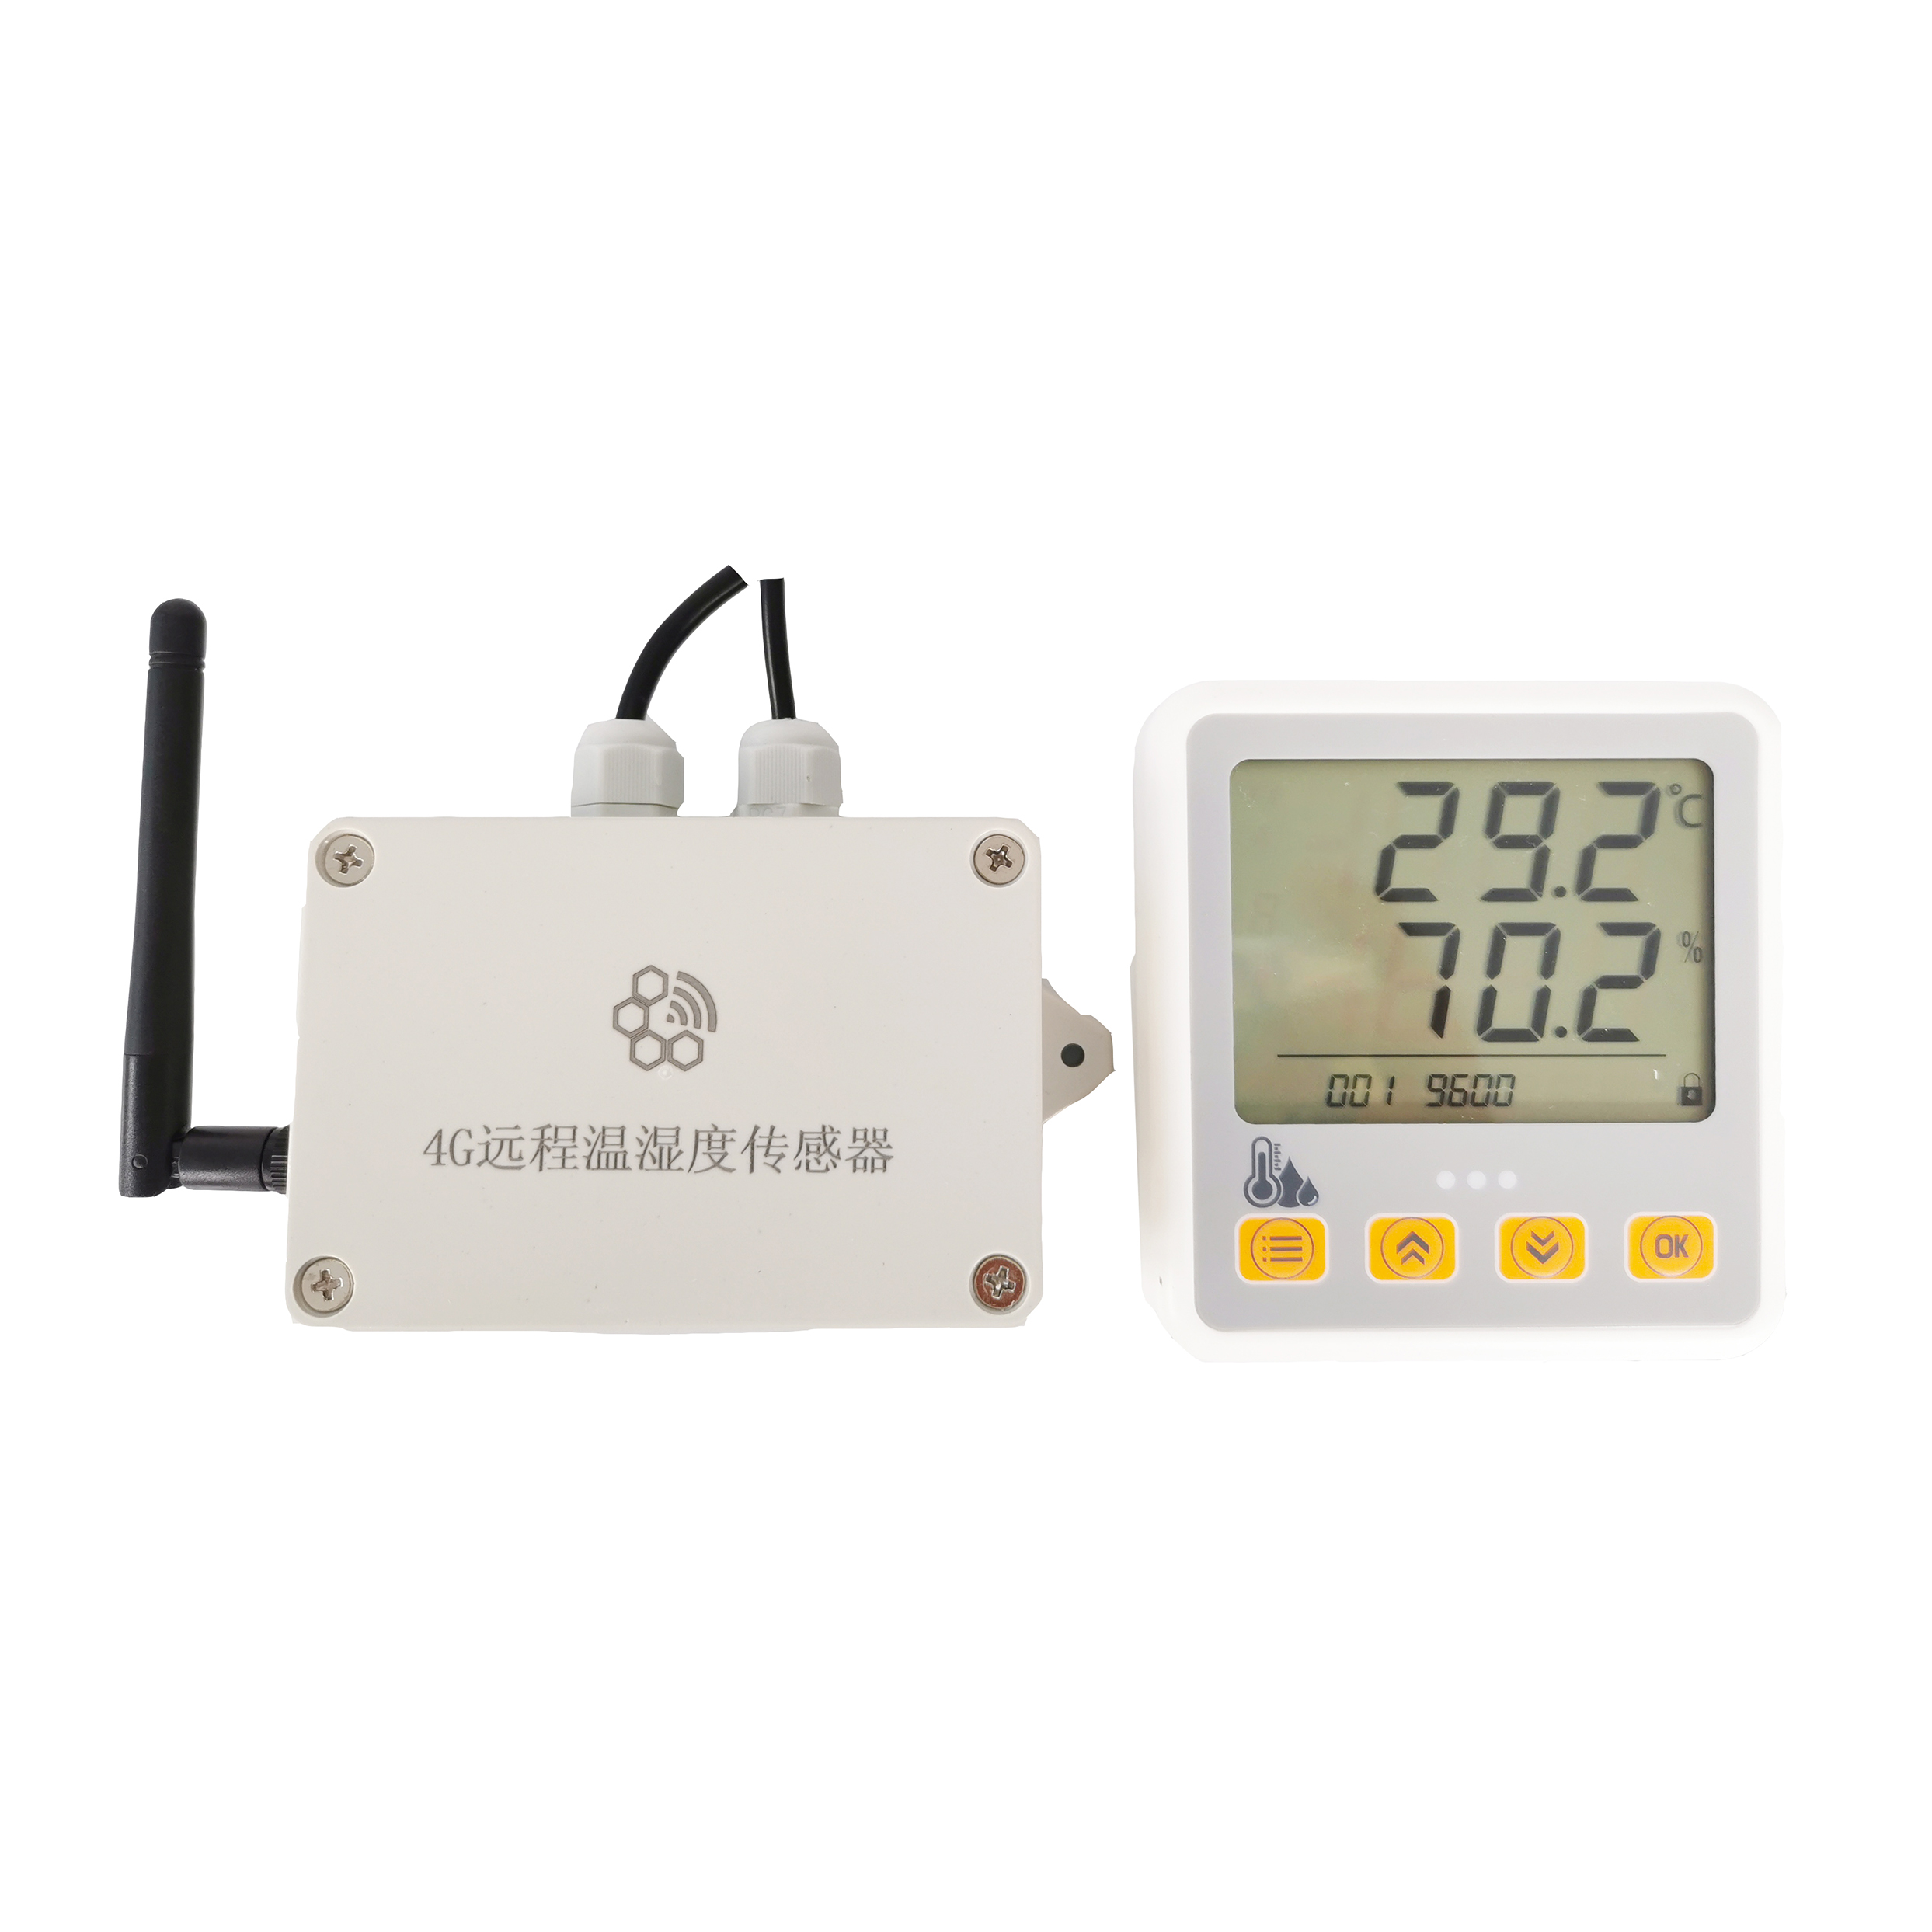 4G远程温湿度传感器（水墨屏）